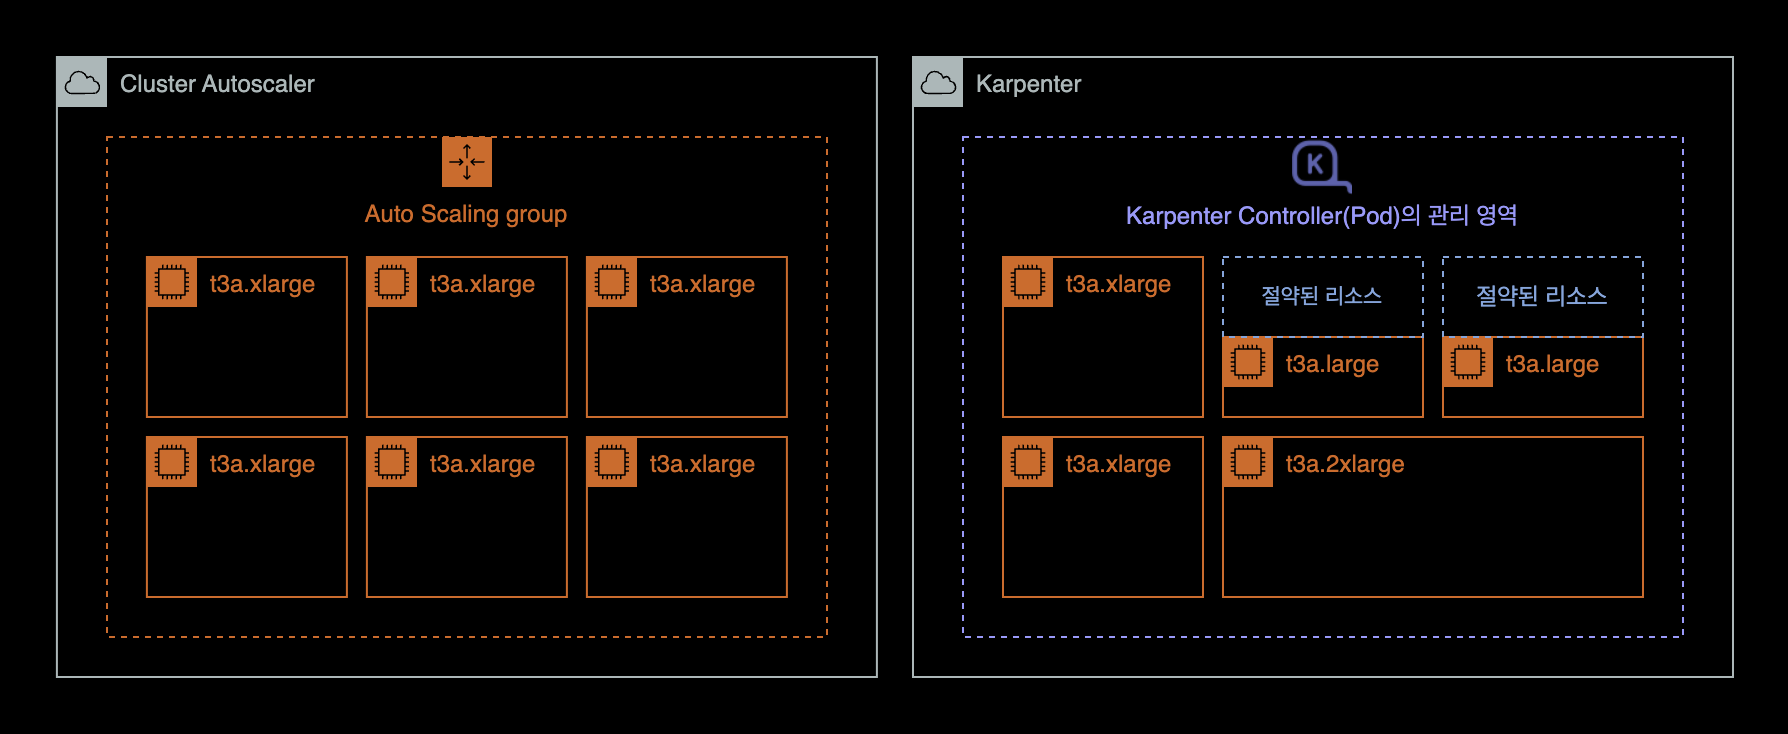 Karpenter와 Cluster Autoscaler 비교